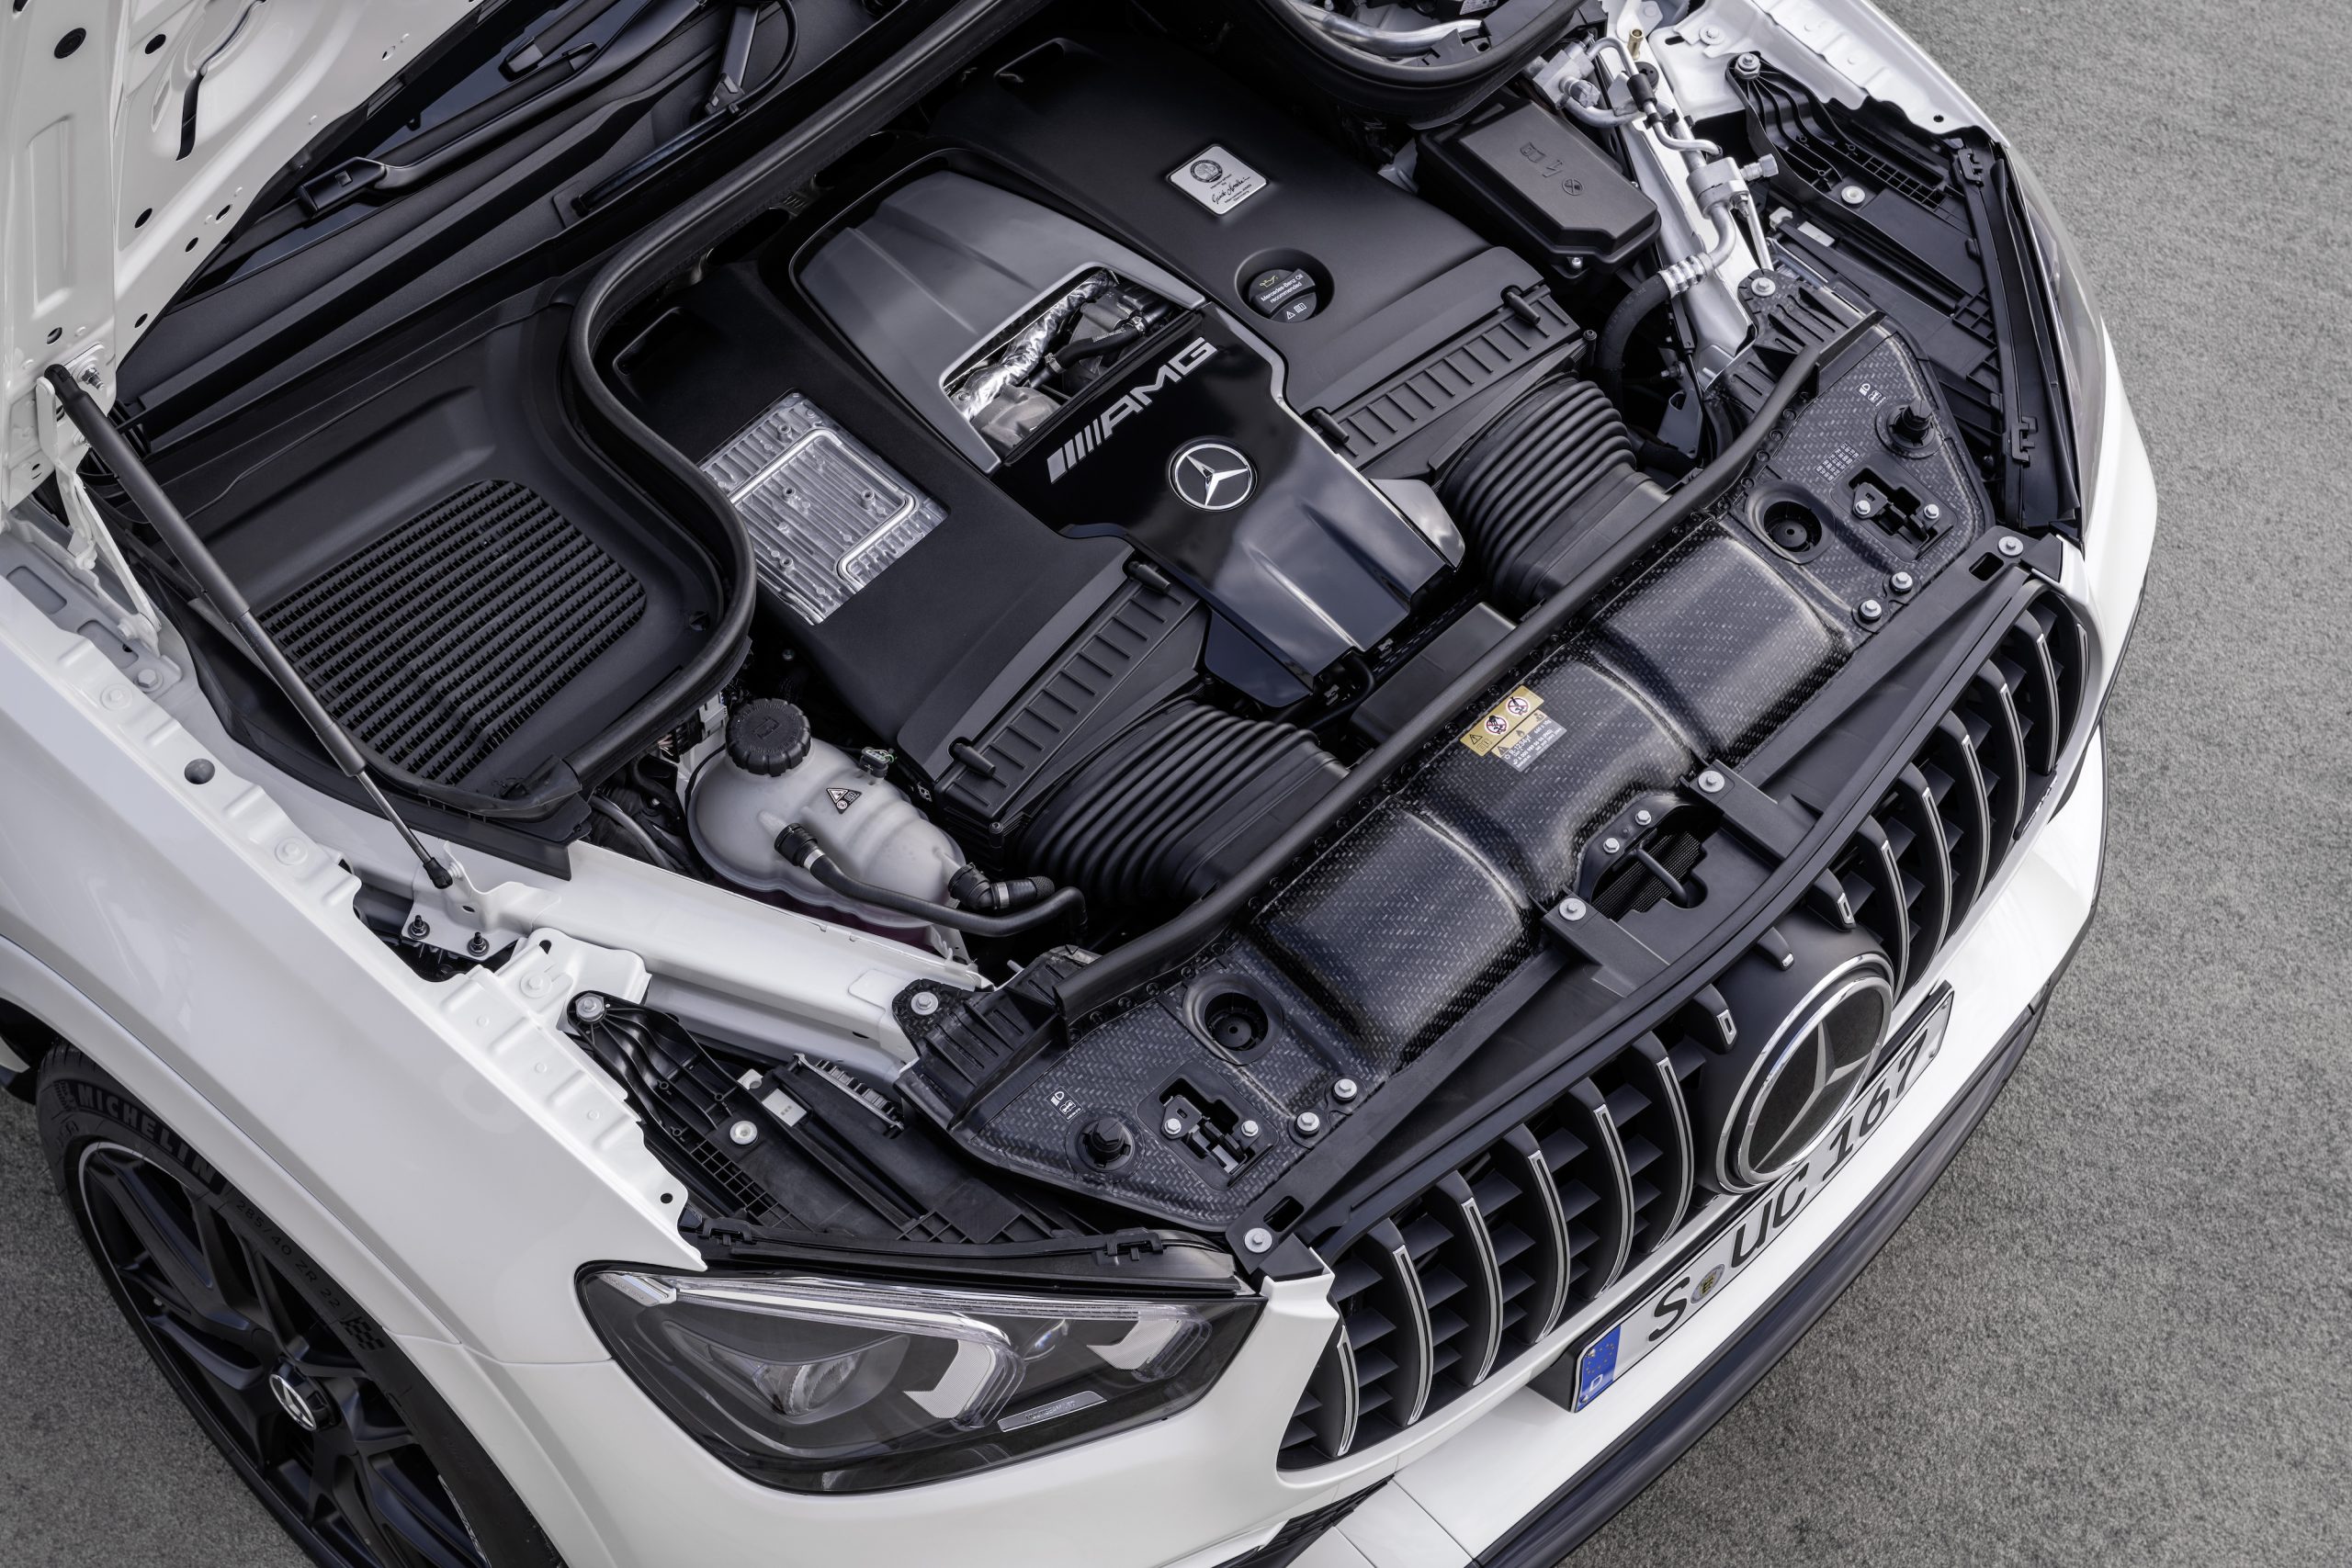 Mercedes-AMG GLE 63 S V8 Engine